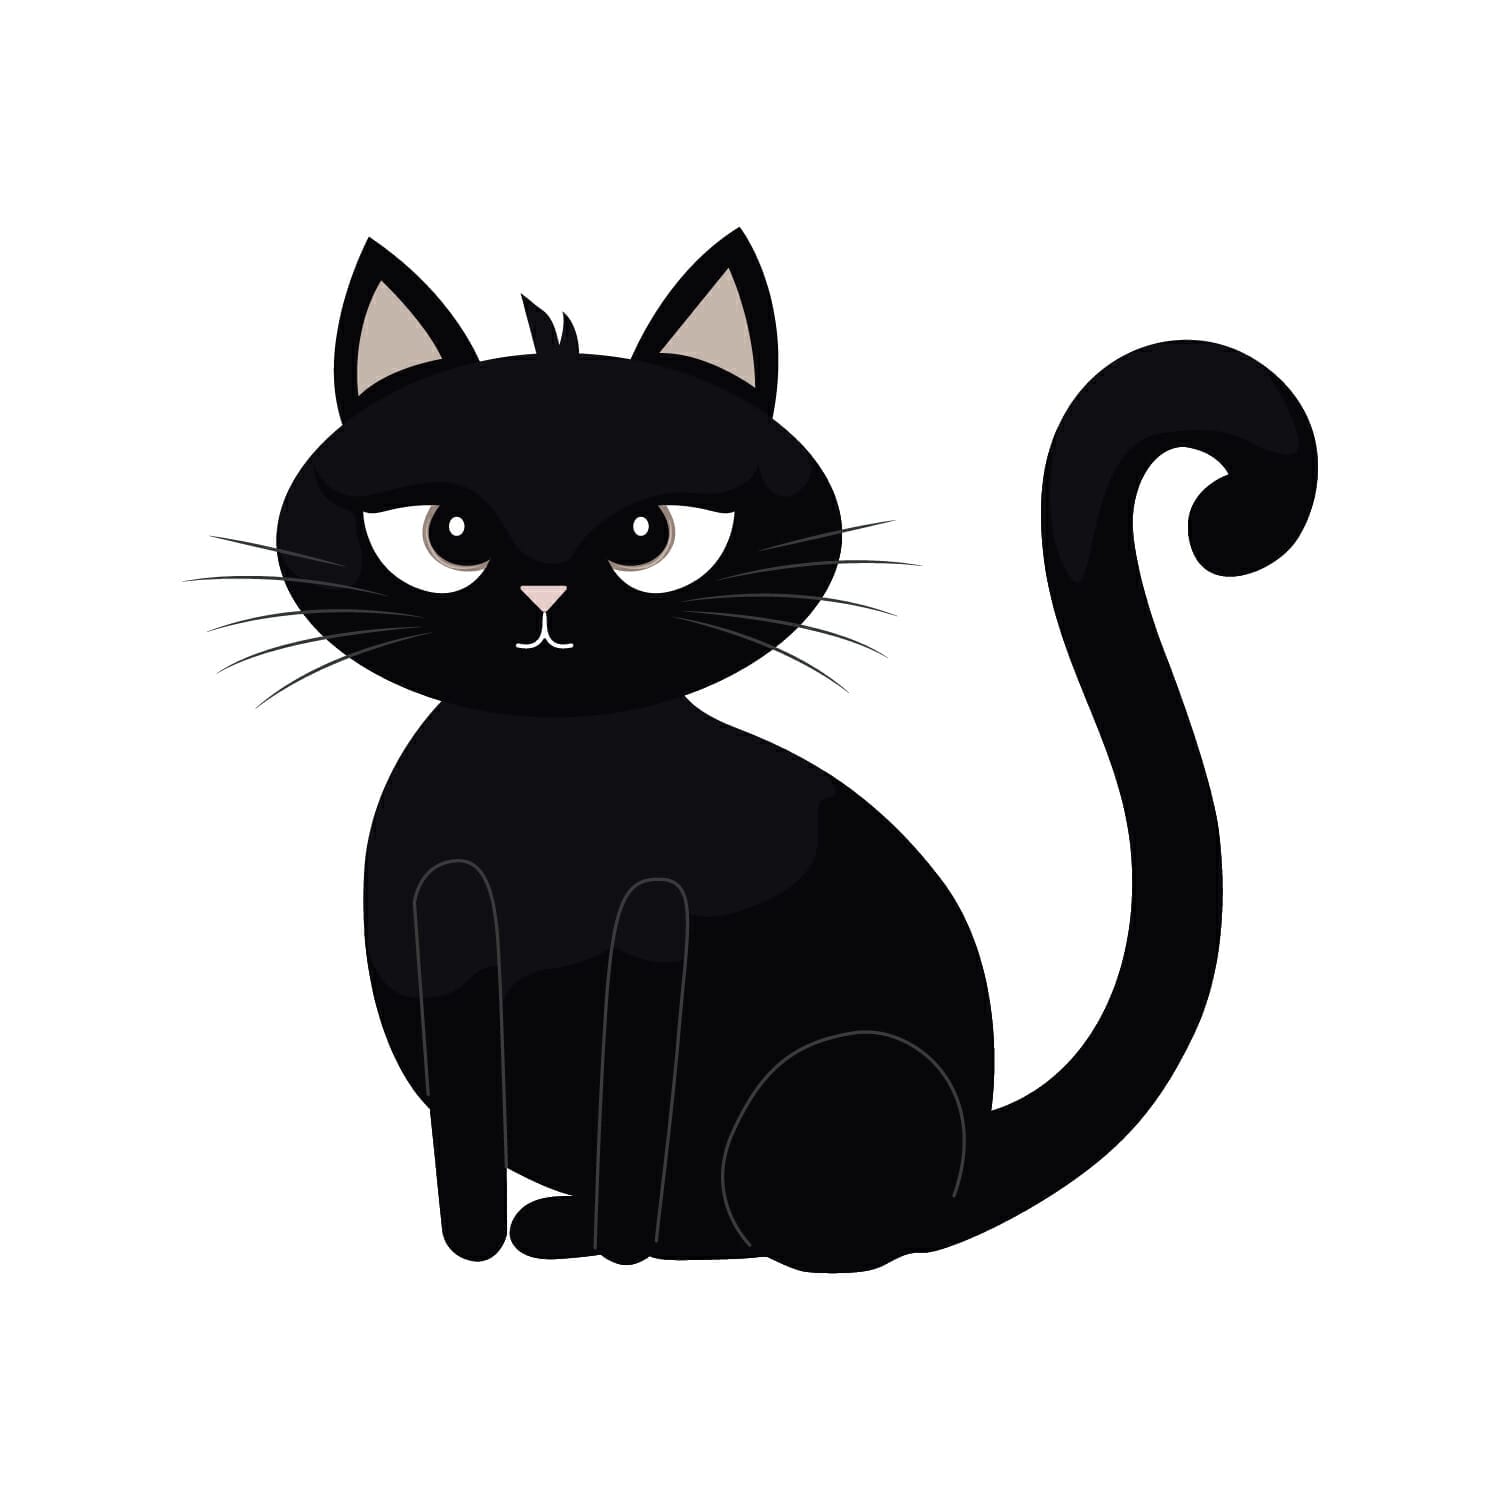 Angry black cat vector design cartoon character